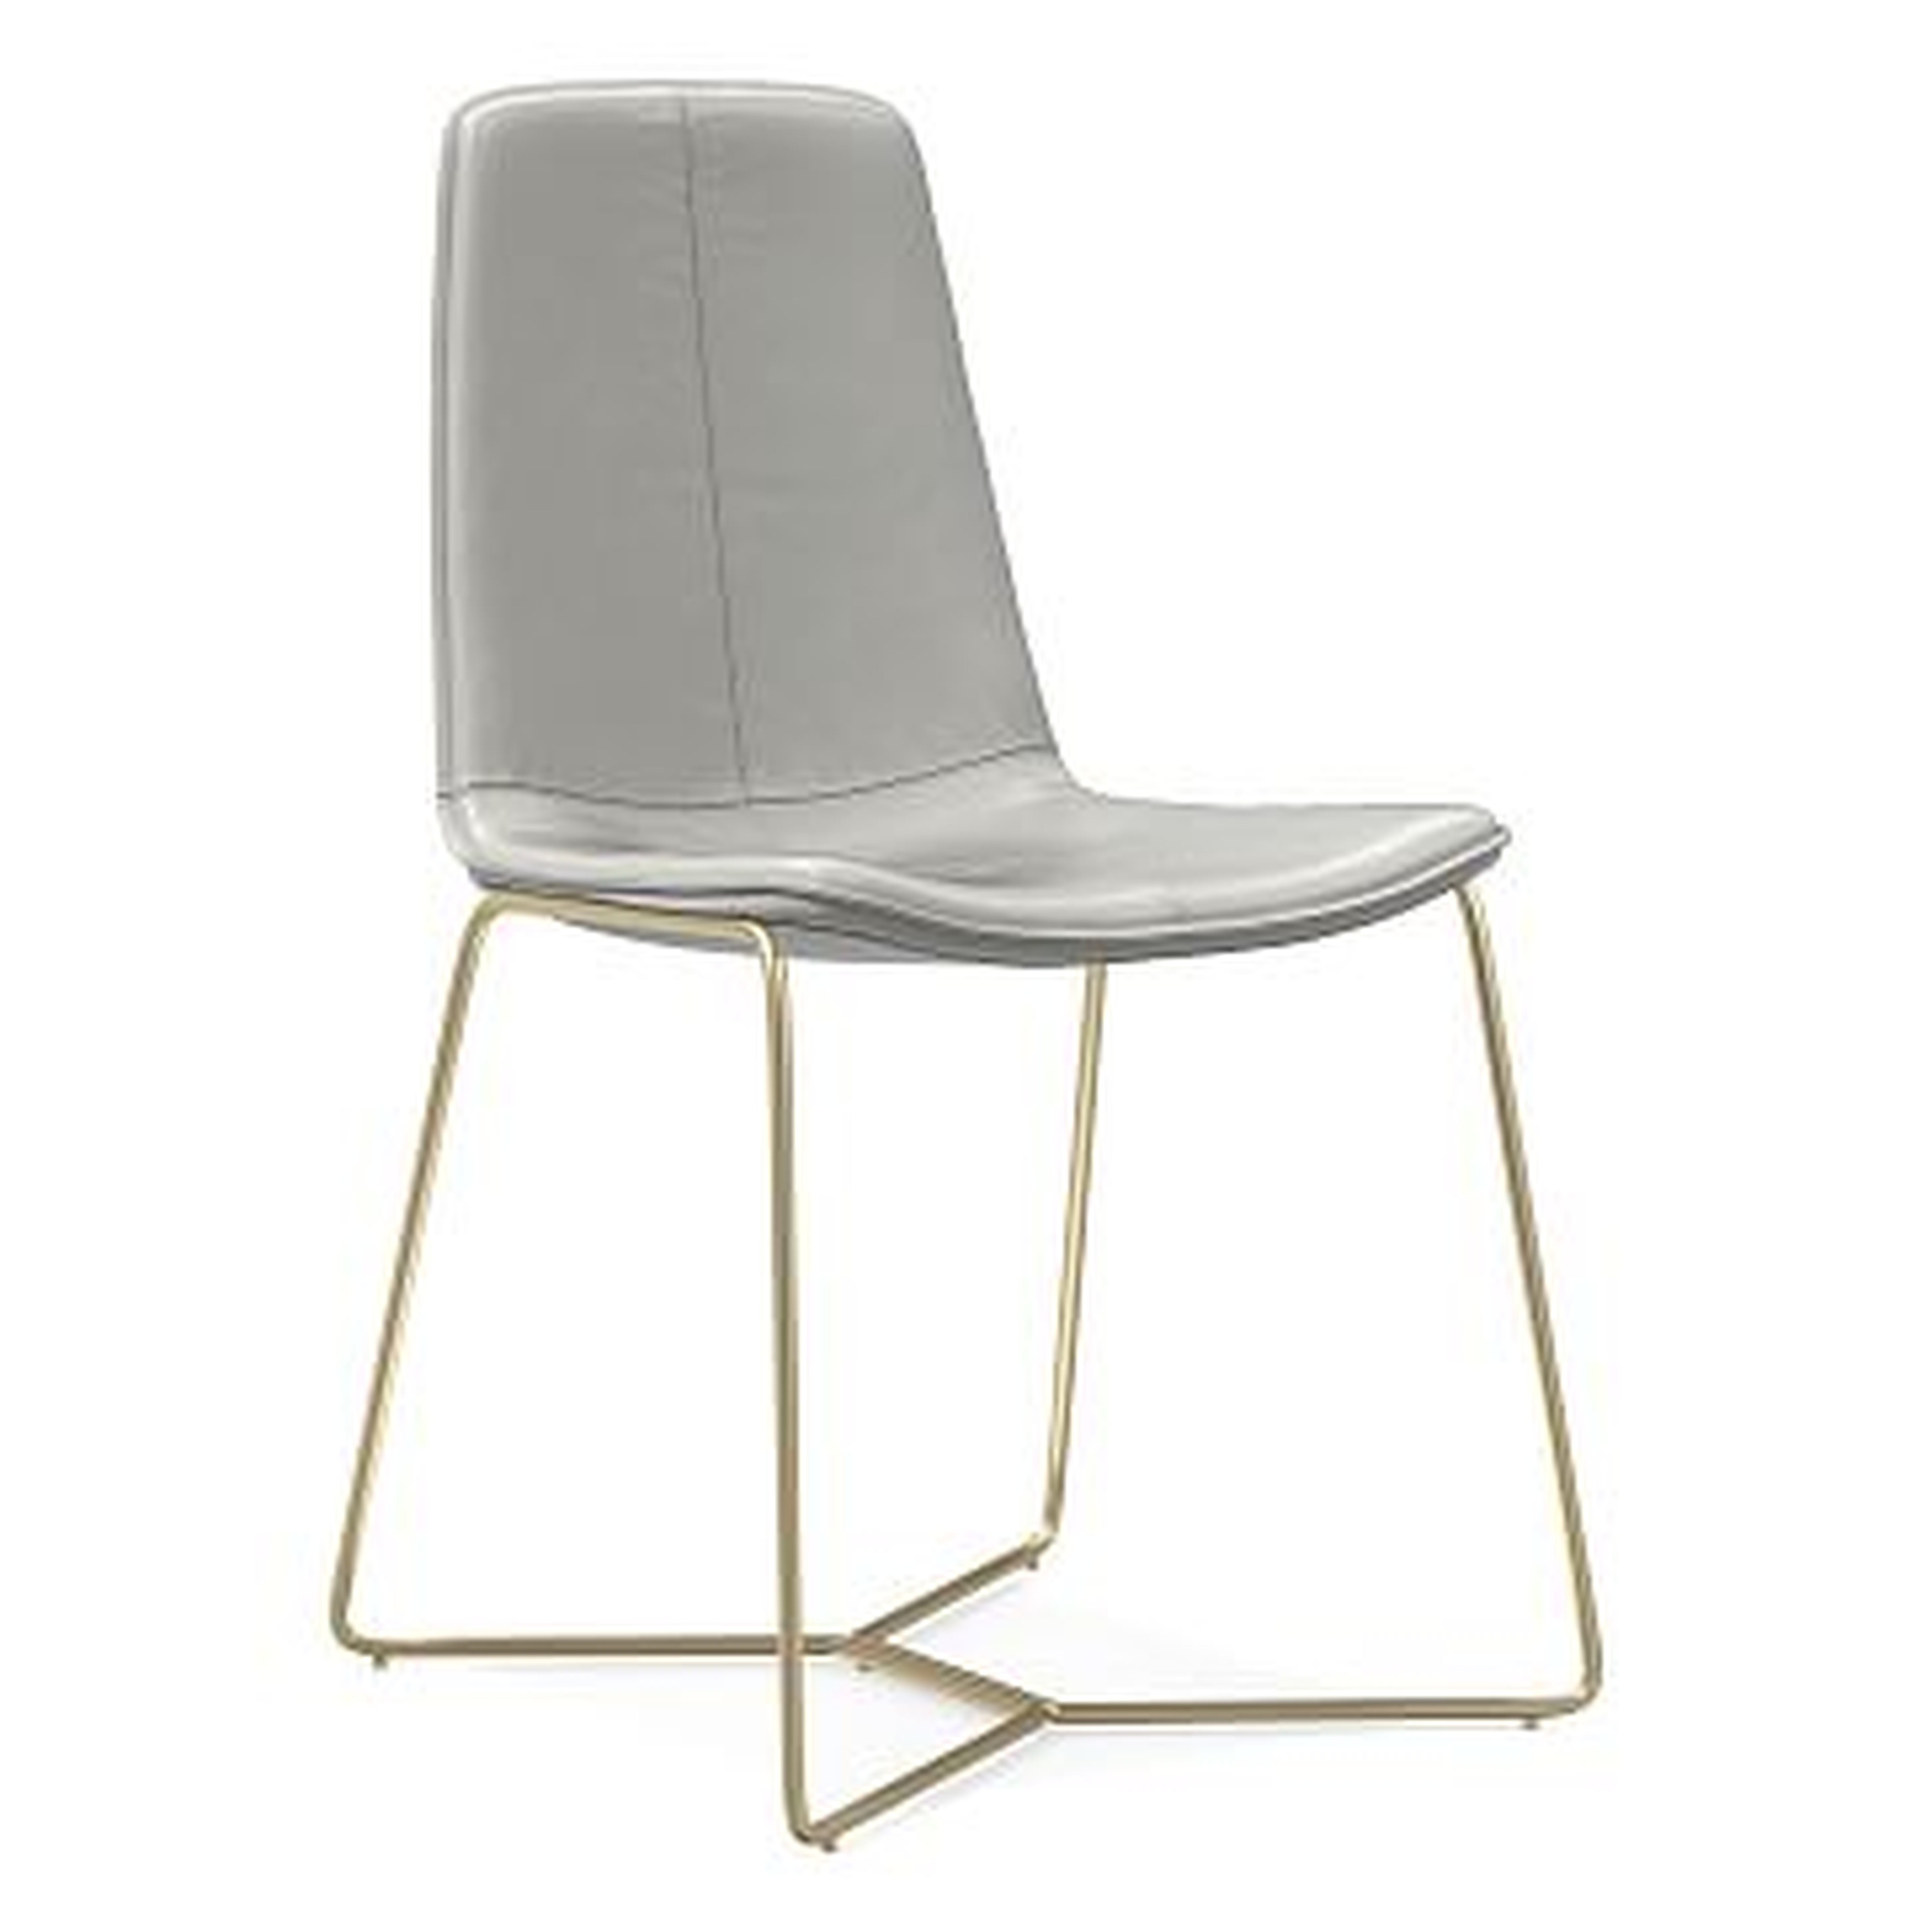 Slope Dining Chair, Parc Leather, Cement, Light Bronze - West Elm